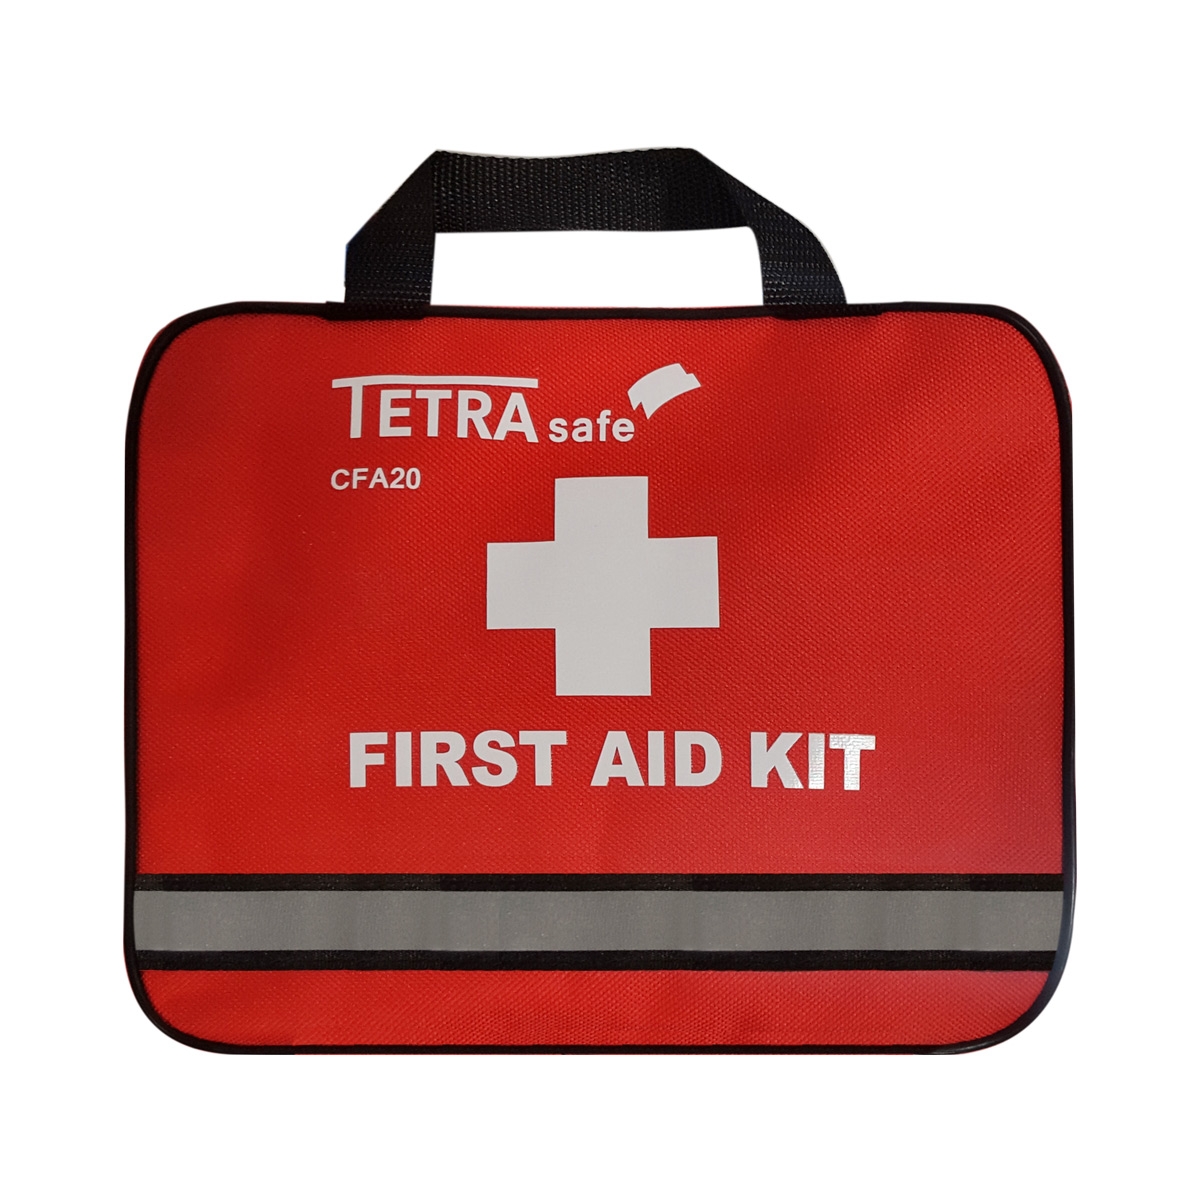 TETRAsafe First Aid Kit